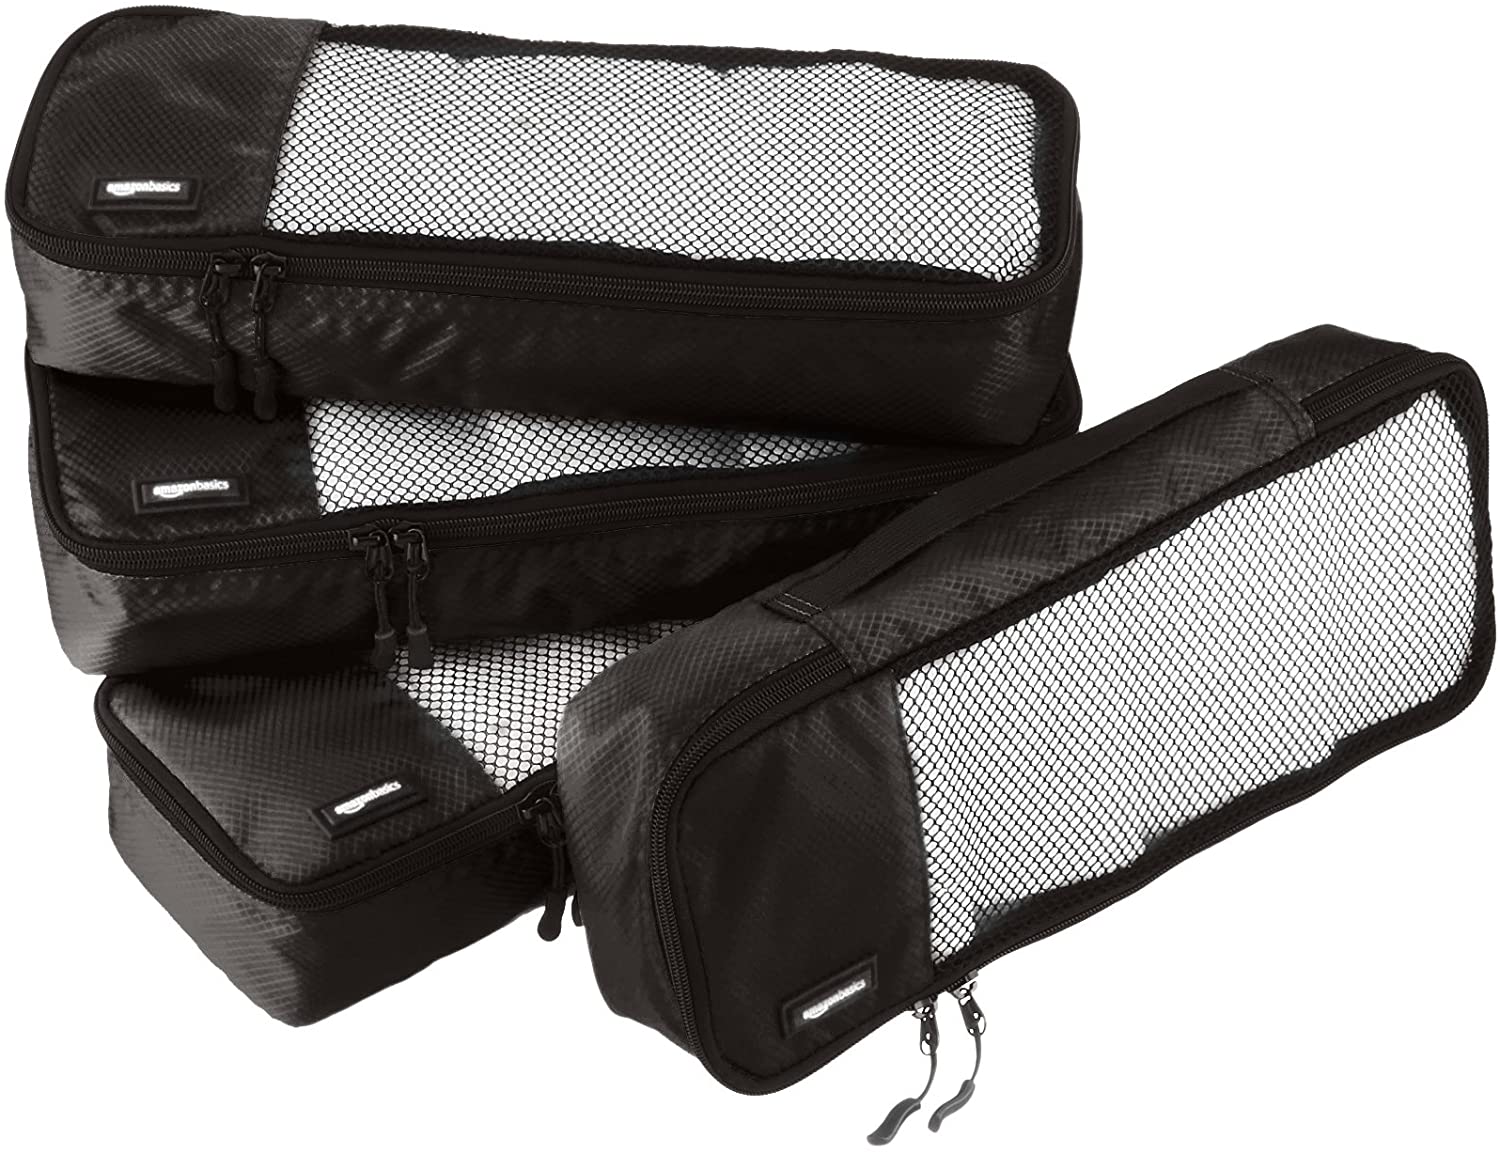 AmazonBasics Double Zipper Luggage Organizer Bags, 4-Piece